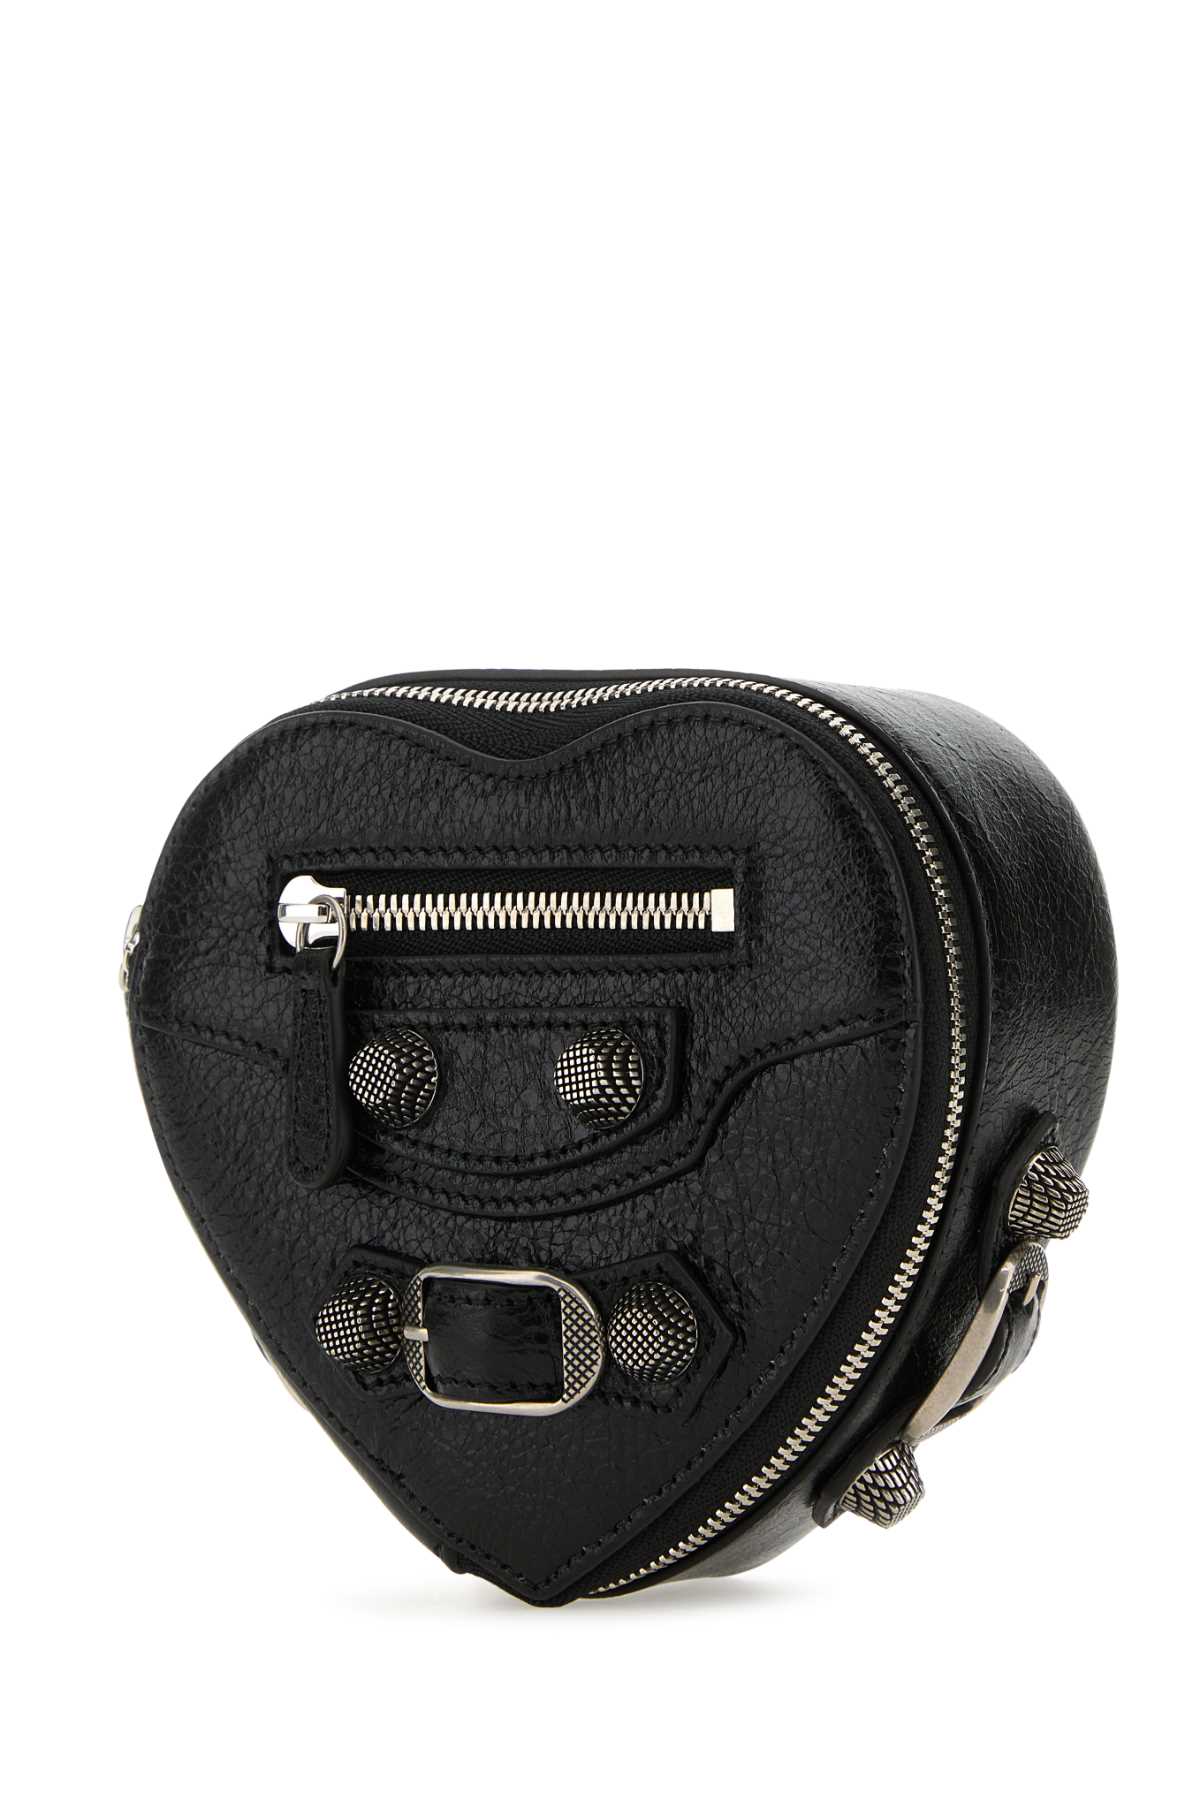 Shop Balenciaga Black Leather Le Cagone Heart Jewel Case